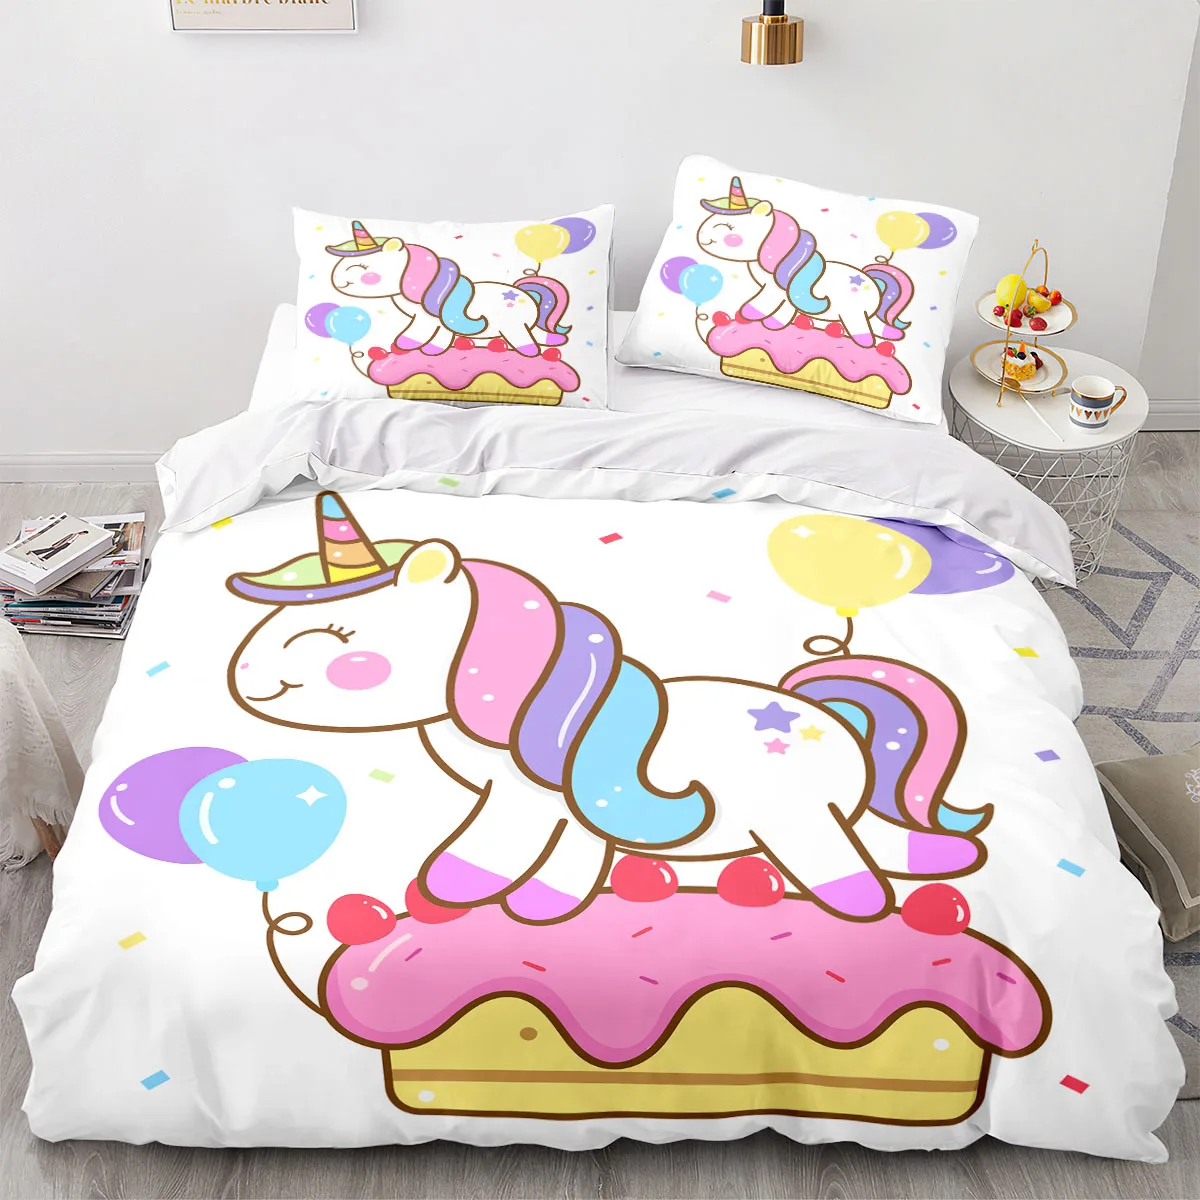 Unicorn Duvet Cover Cartoon Rainbow Colorful Unicorn Cute Bedding Set Romantic Theme for Kids Girls Polyester Comforter Cover images - 6